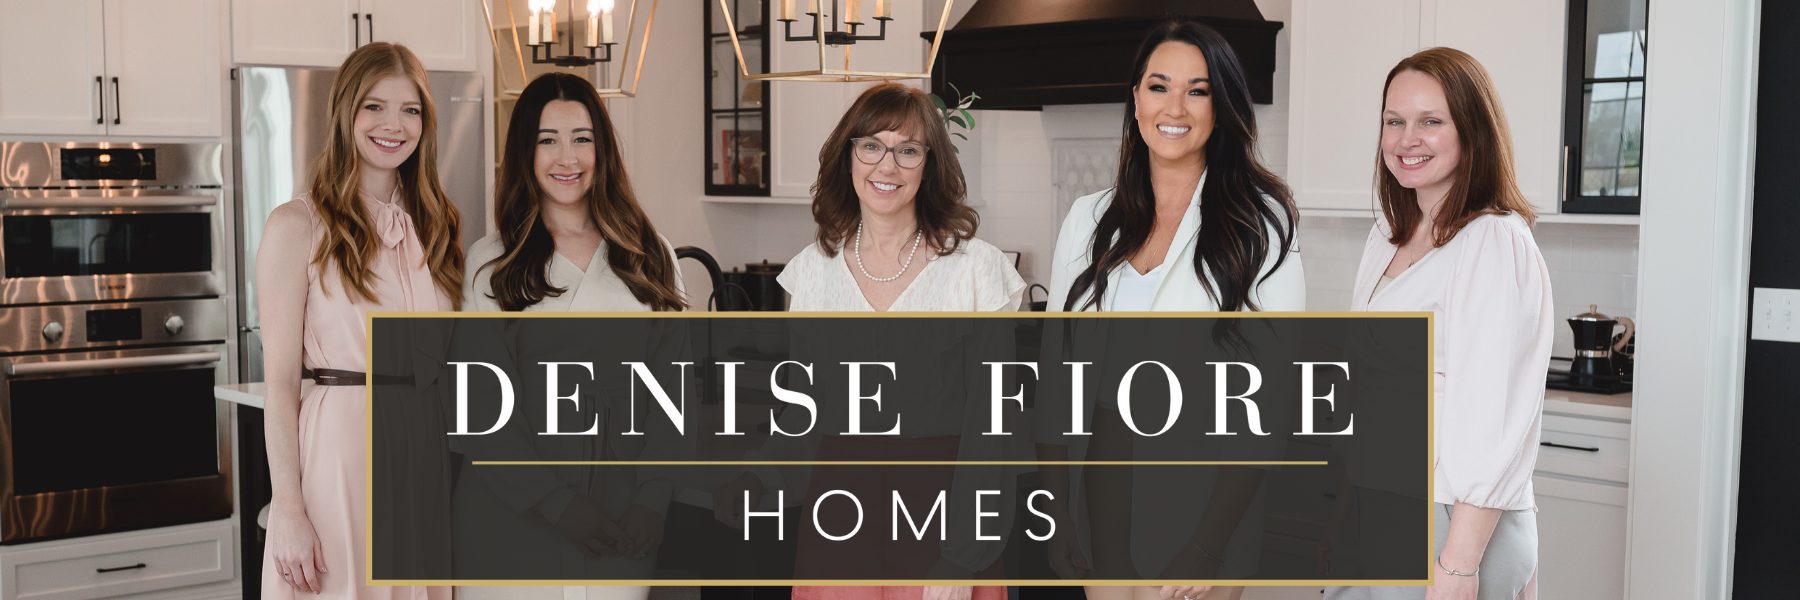 Denise Fiore Homes Team